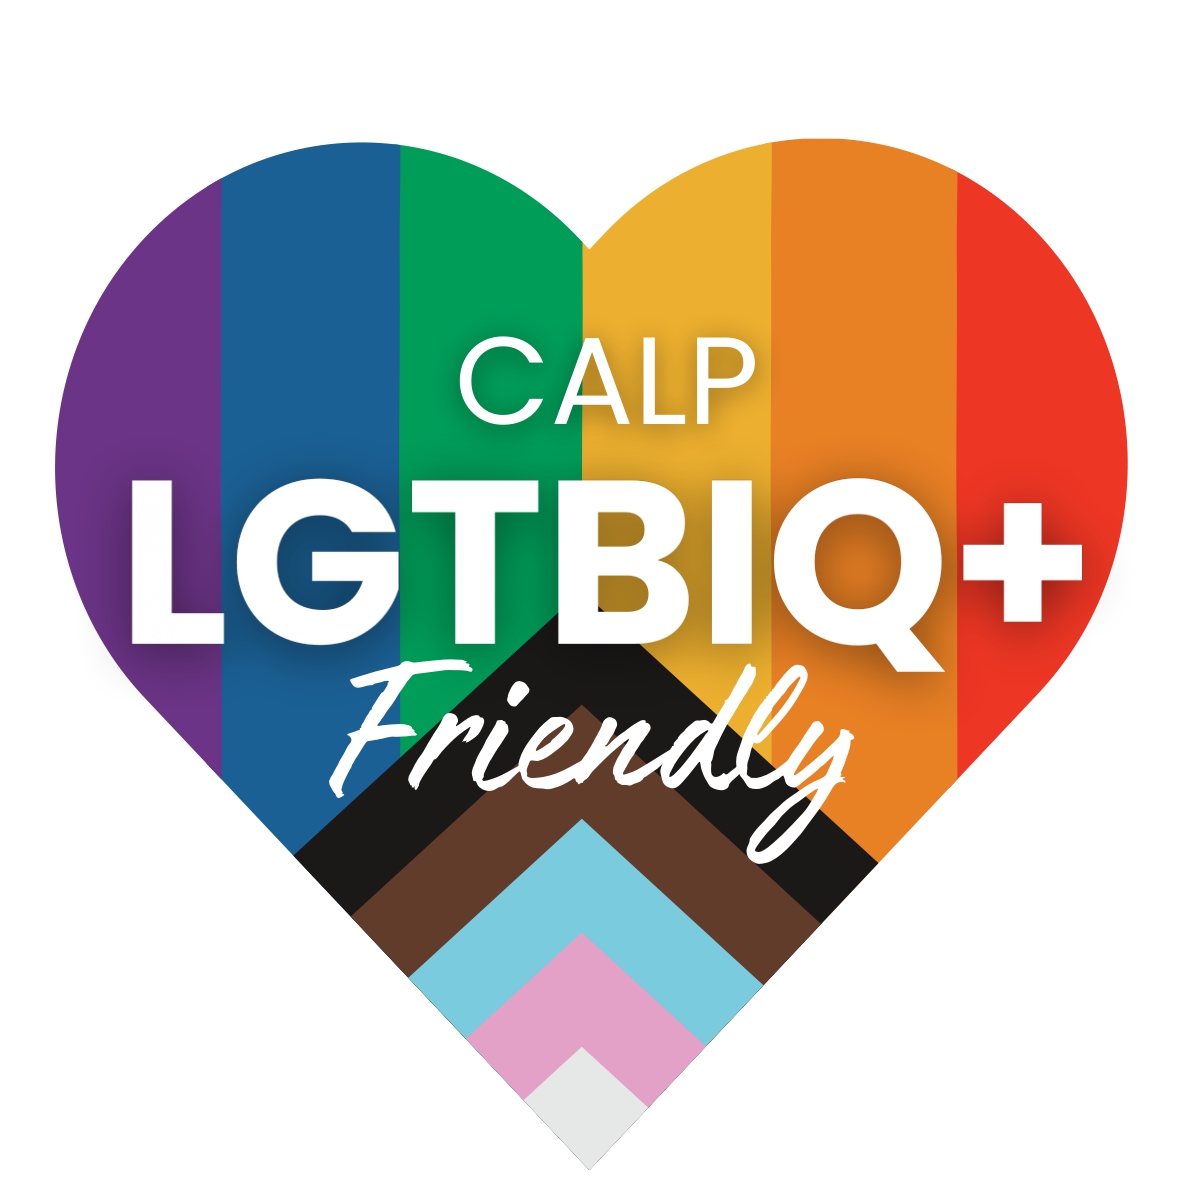 CALP LGTBIQ+ Friendly